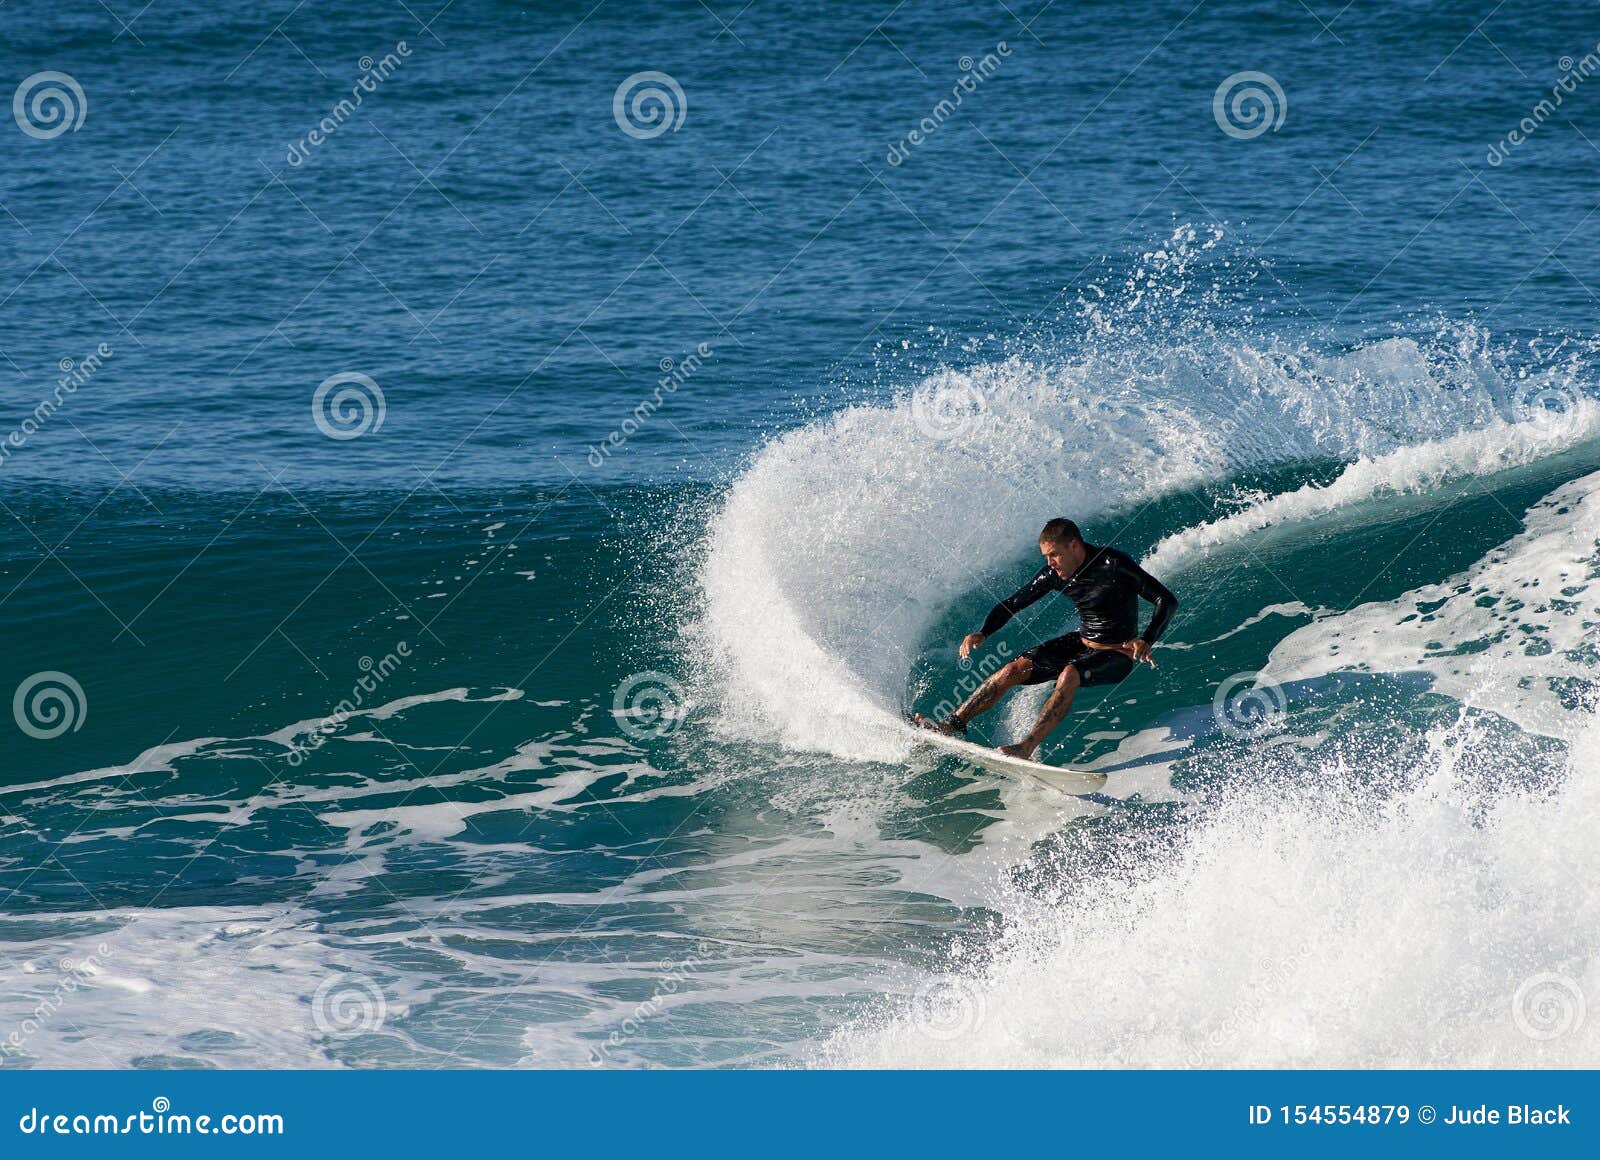 nariz tímido Sinfonía Surfer Executing a Slashing Frontside Top-turn. Editorial Stock Image -  Image of front, oclock: 154554879